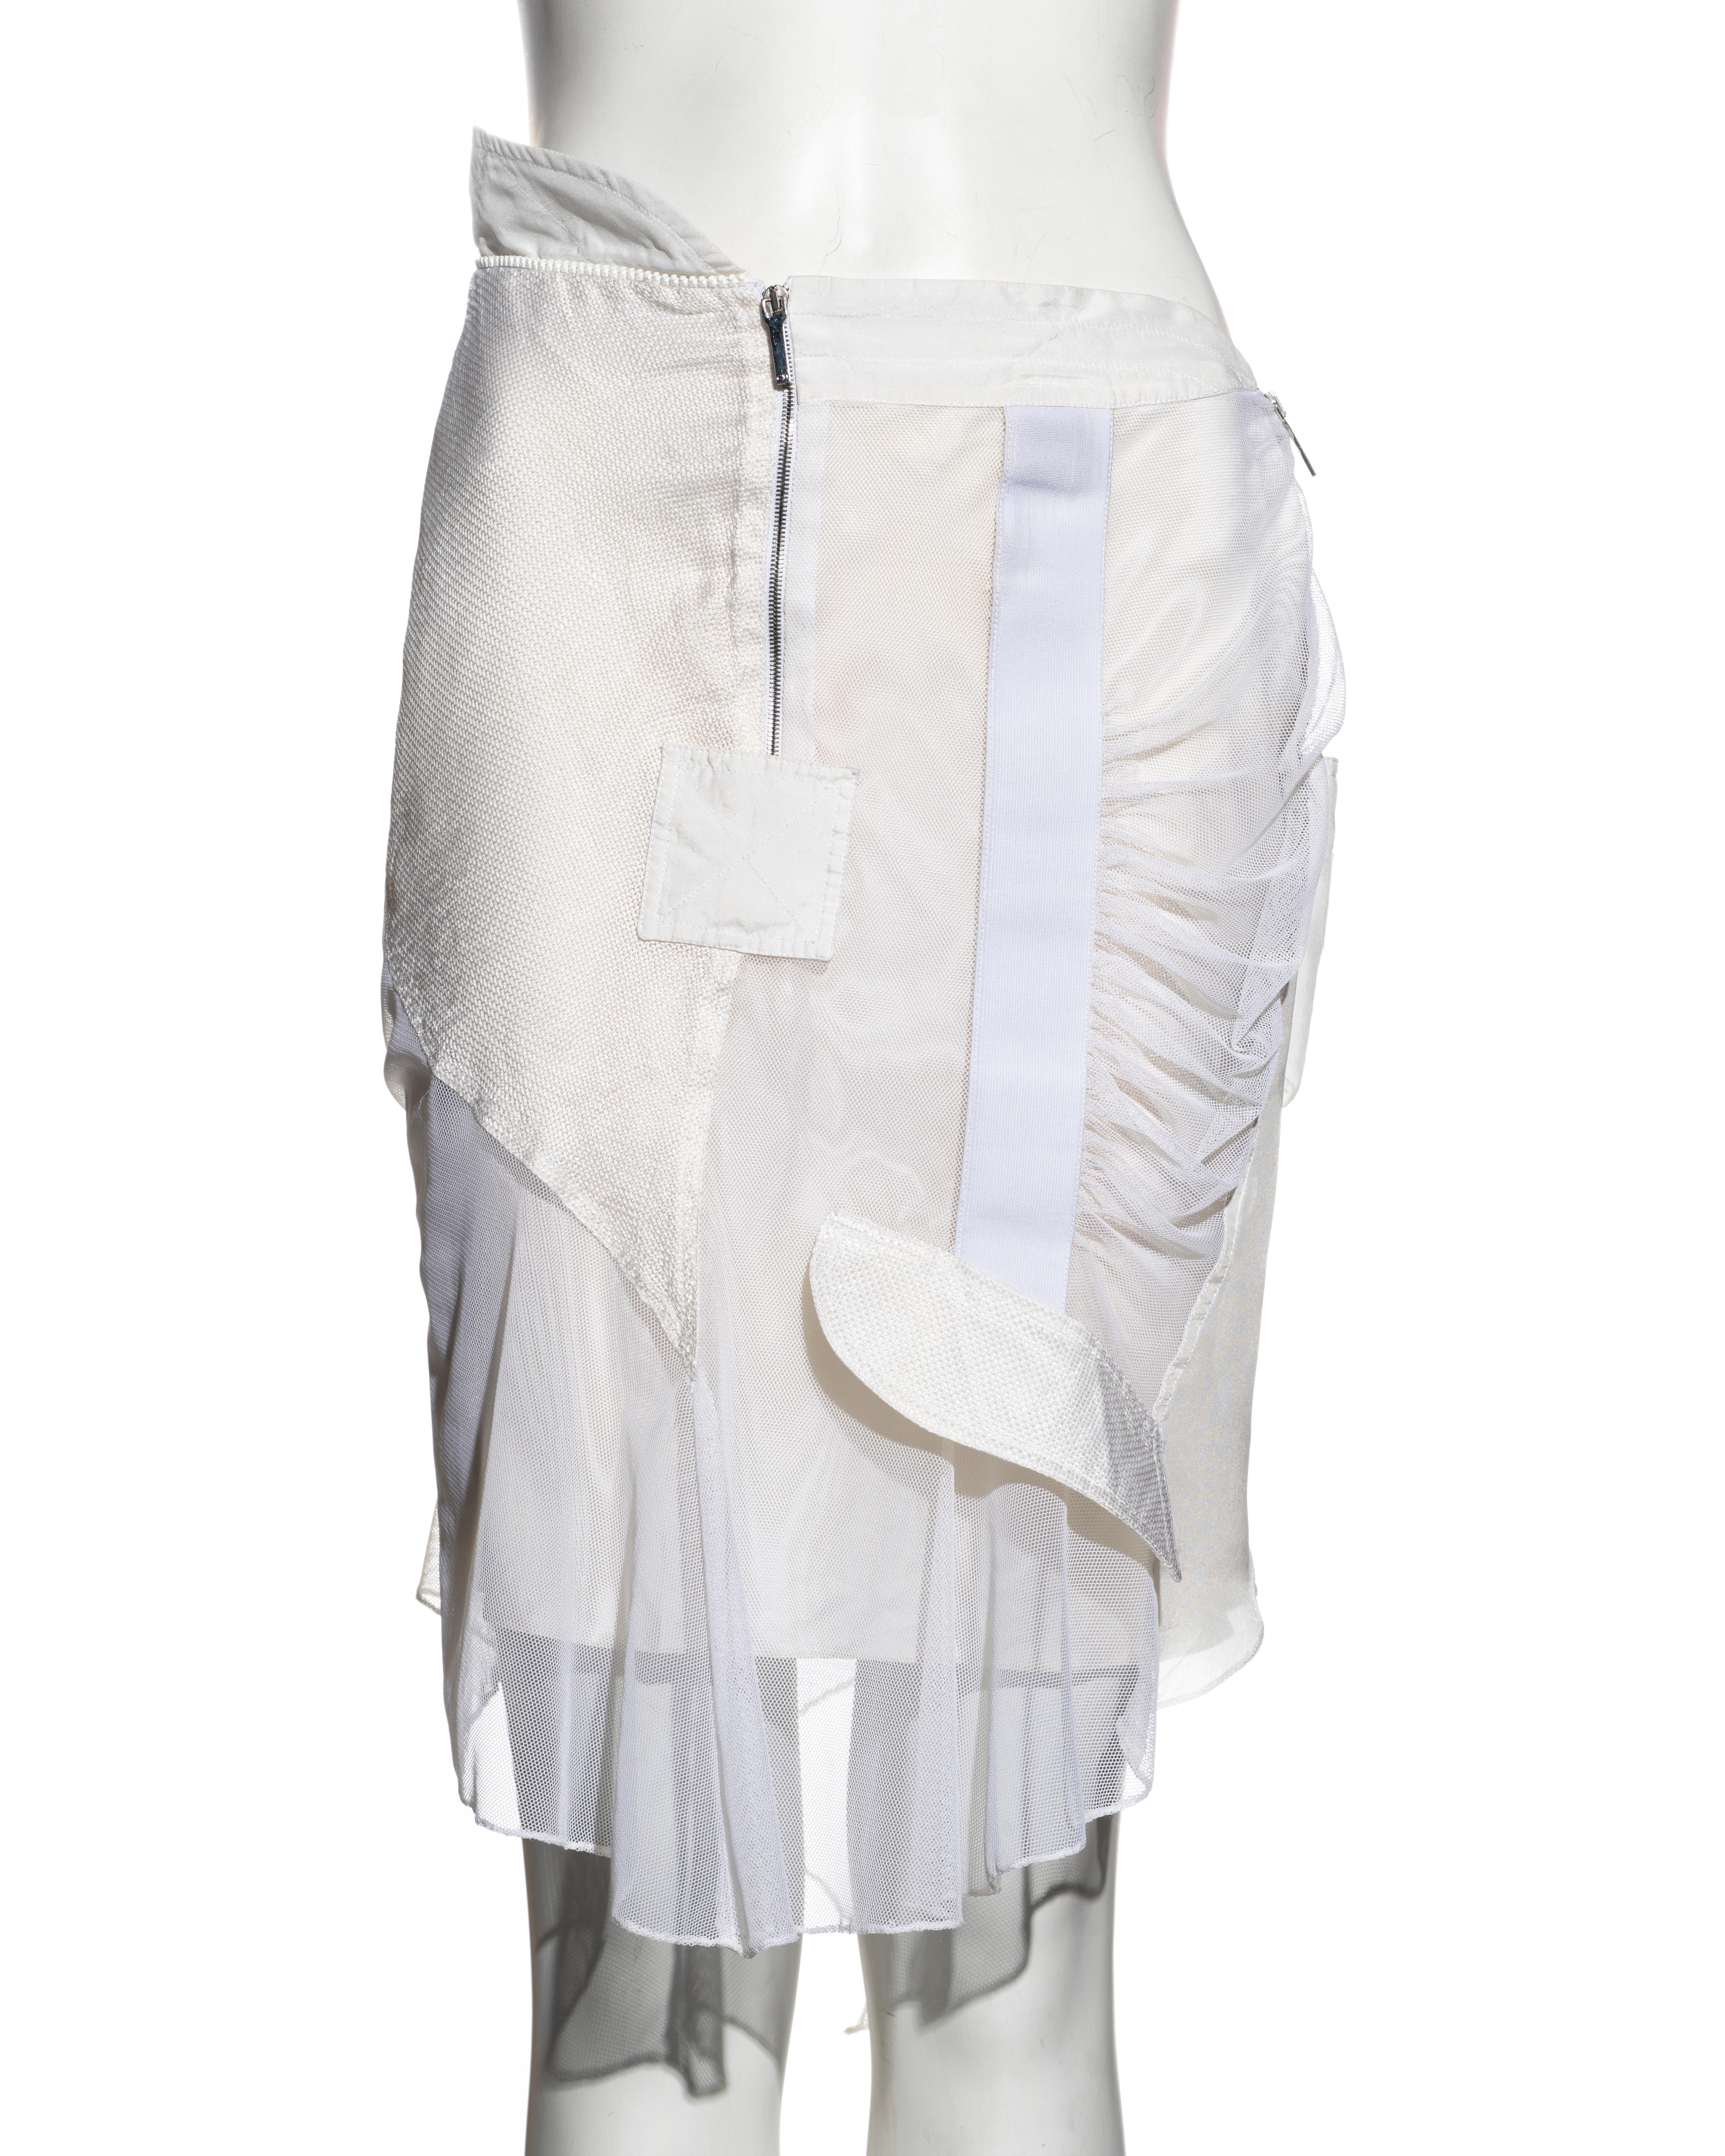 ▪ Christian Dior white deconstructed skirt
▪ Designed by John Galliano
▪ Nylon mesh overlay
▪ Silk lining 
▪ Asymmetric waist and hemline 
▪ Decorative pockets 
▪ FR 40 - UK 12 - US 8
▪ Spring-Summer 2002
▪ 60% Nylon, 40% Lycra. Lining: 95% Silk, 5%